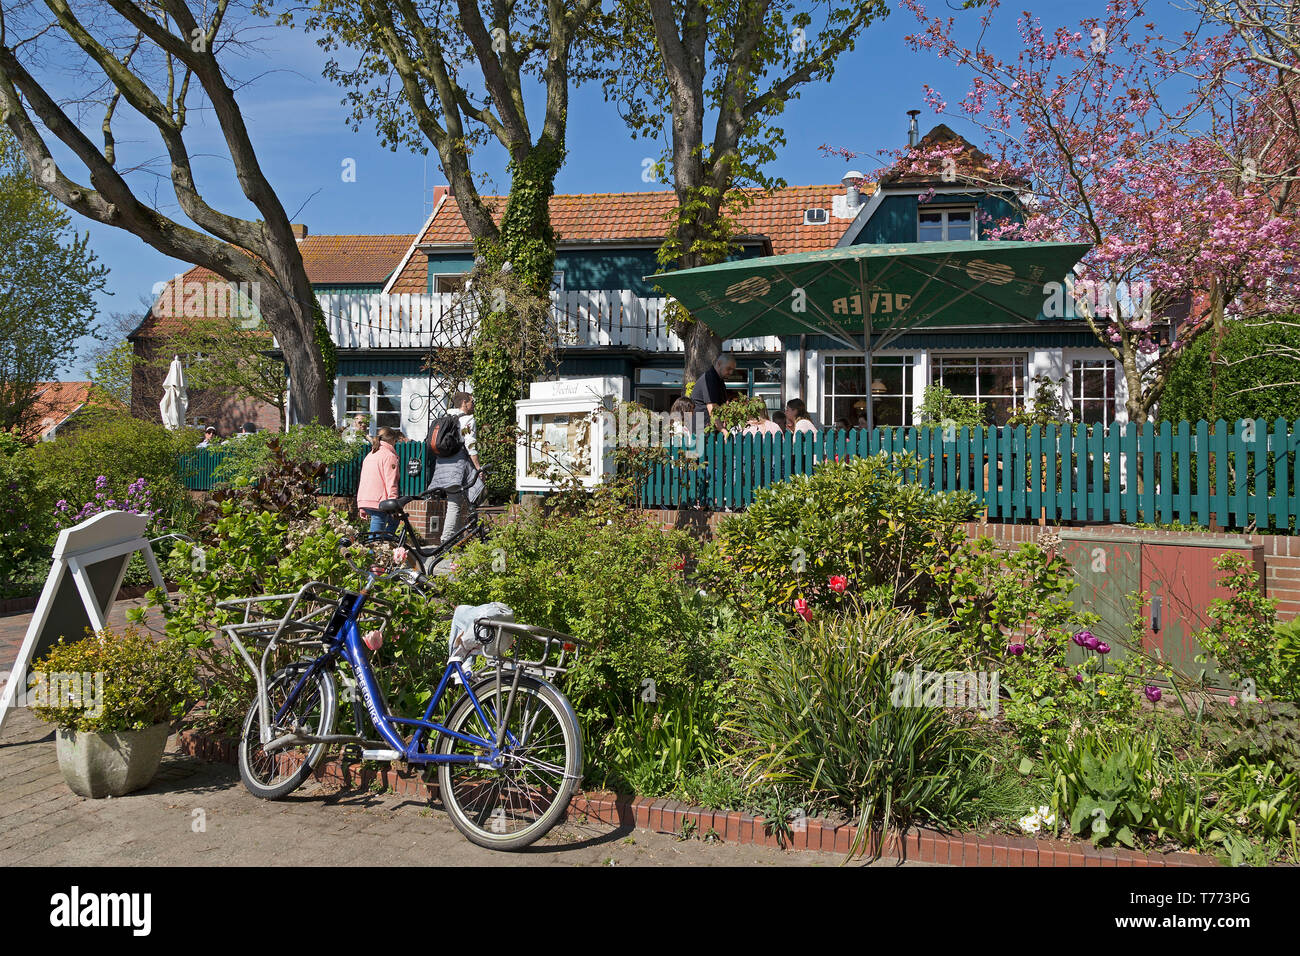 village centre, Spiekeroog Island, East Friesland, Lower Saxony, Germany Stock Photo